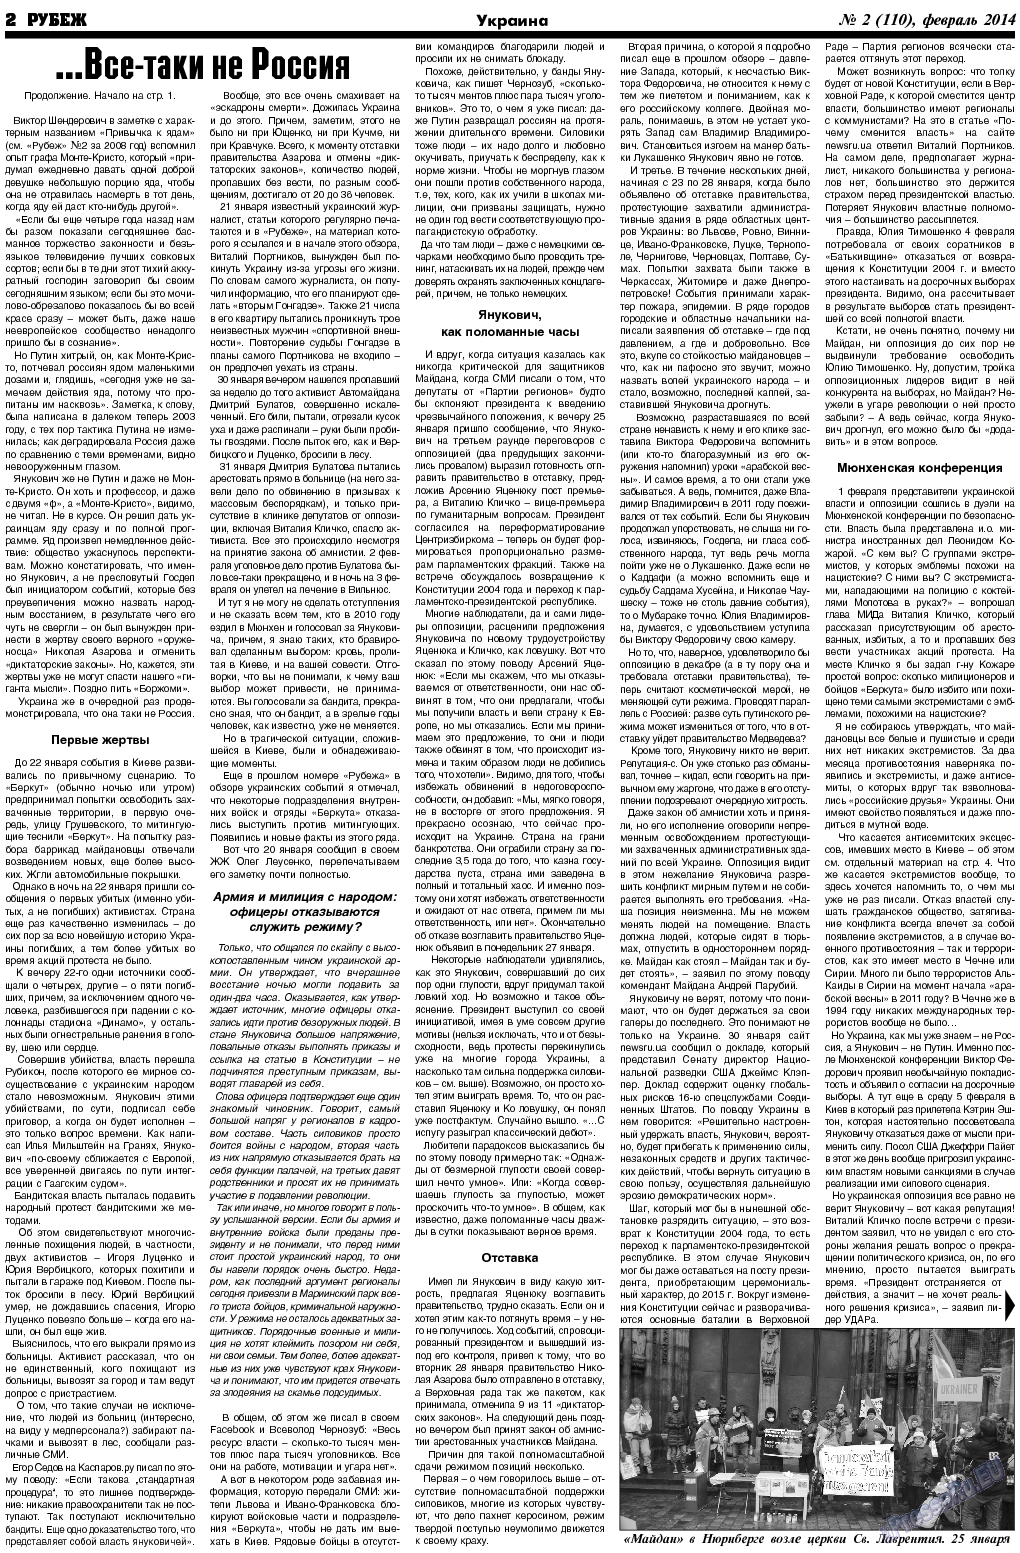 Рубеж, газета. 2014 №2 стр.2